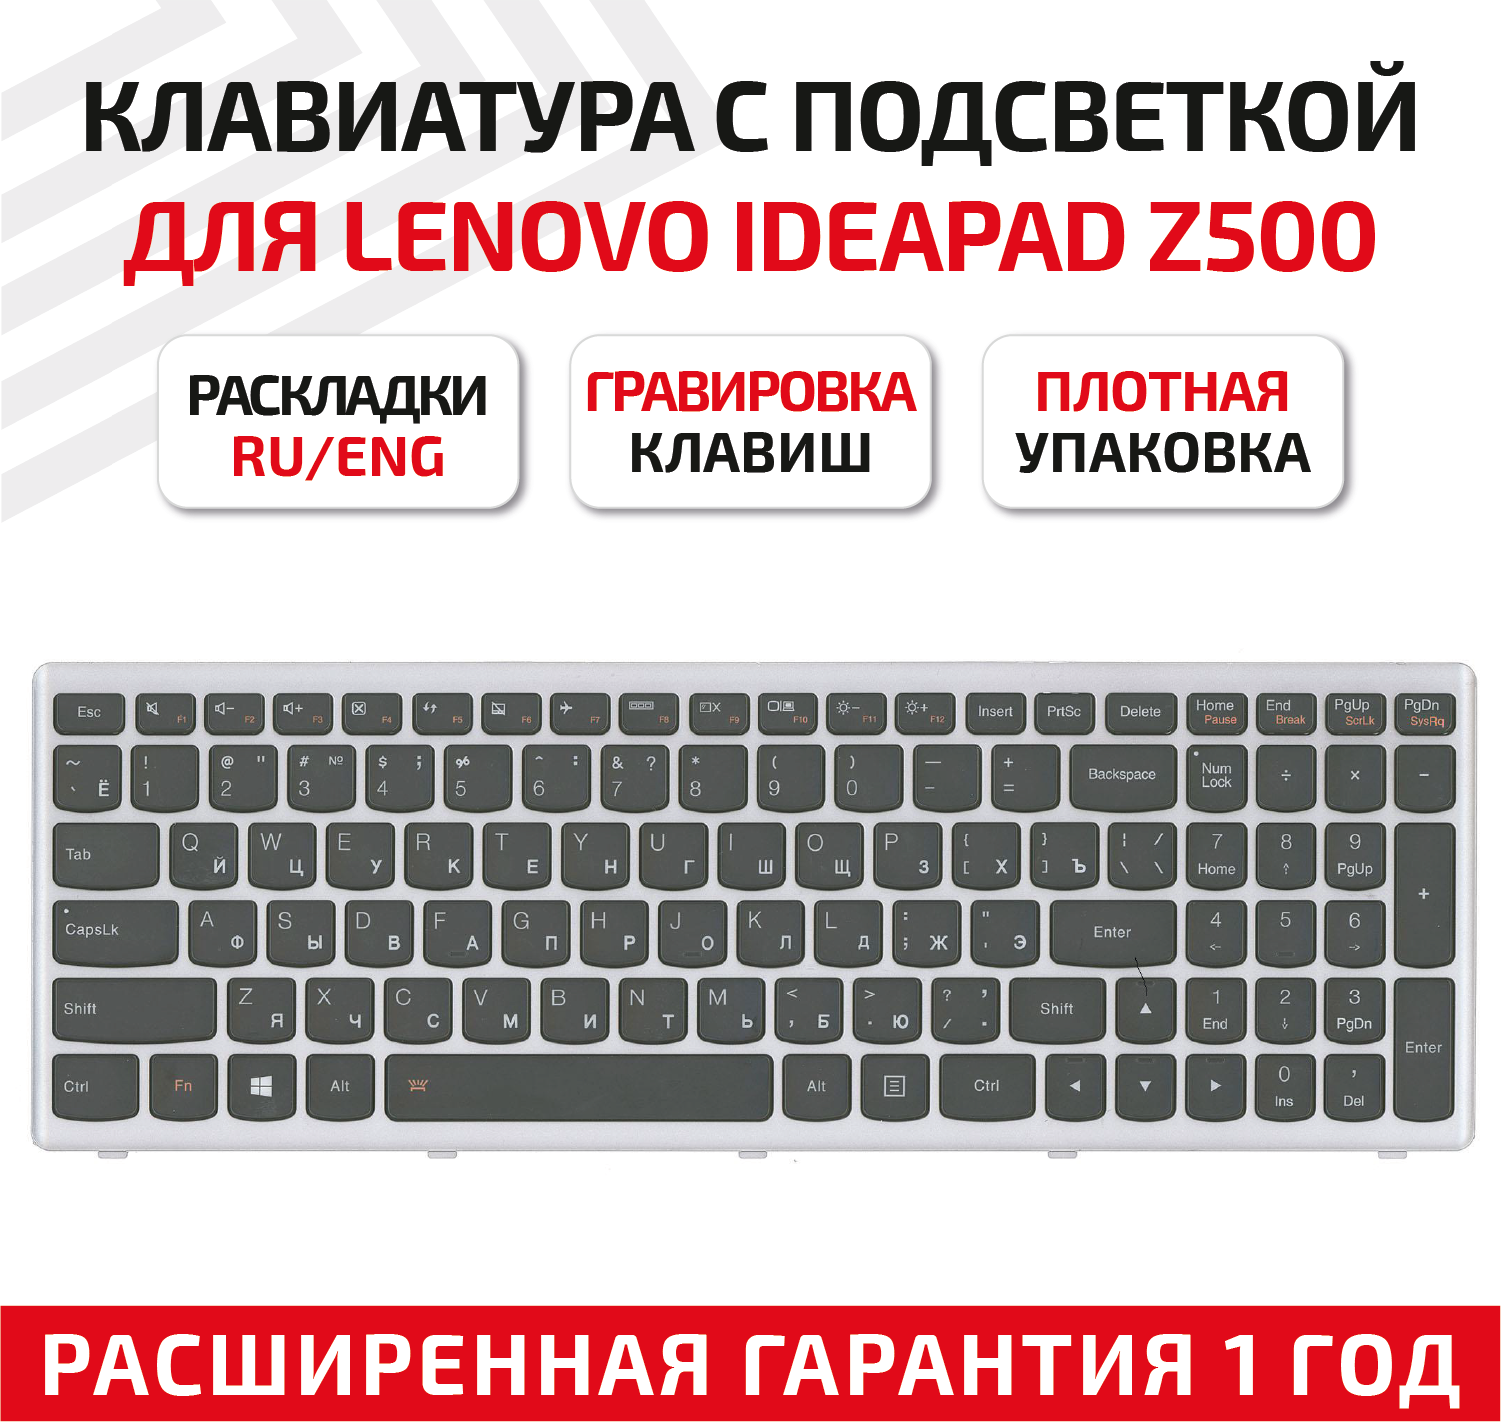 Клавиатура (keyboard) 25-206237 для ноутбука Lenovo IdeaPad P500, Z500, Z500A, Z500G, Z500T Series, черная с серой рамкой, с подсветкой